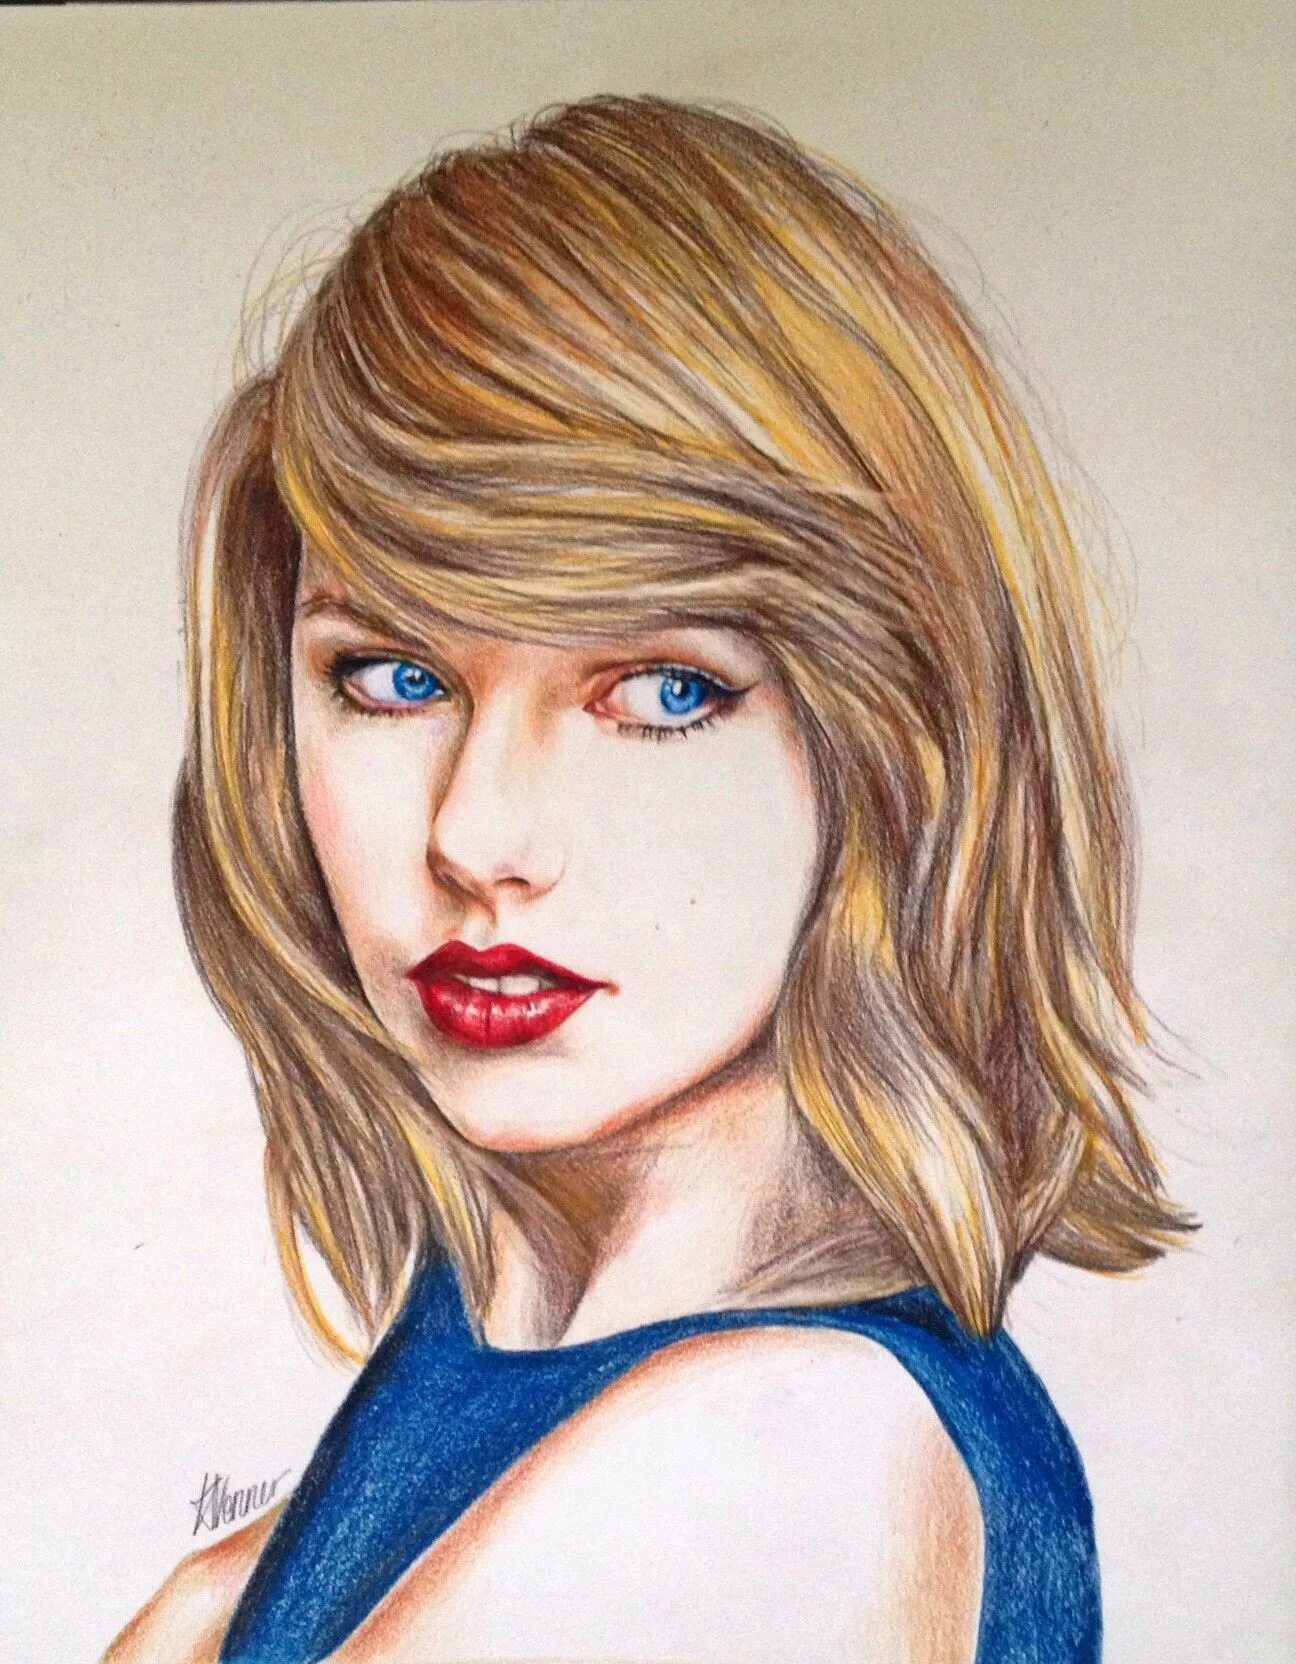 Тейлор Свифт портрет. Тейлор Свифт художник. Тейлор Свифт рисунок. Taylor Swift портрет artistic.